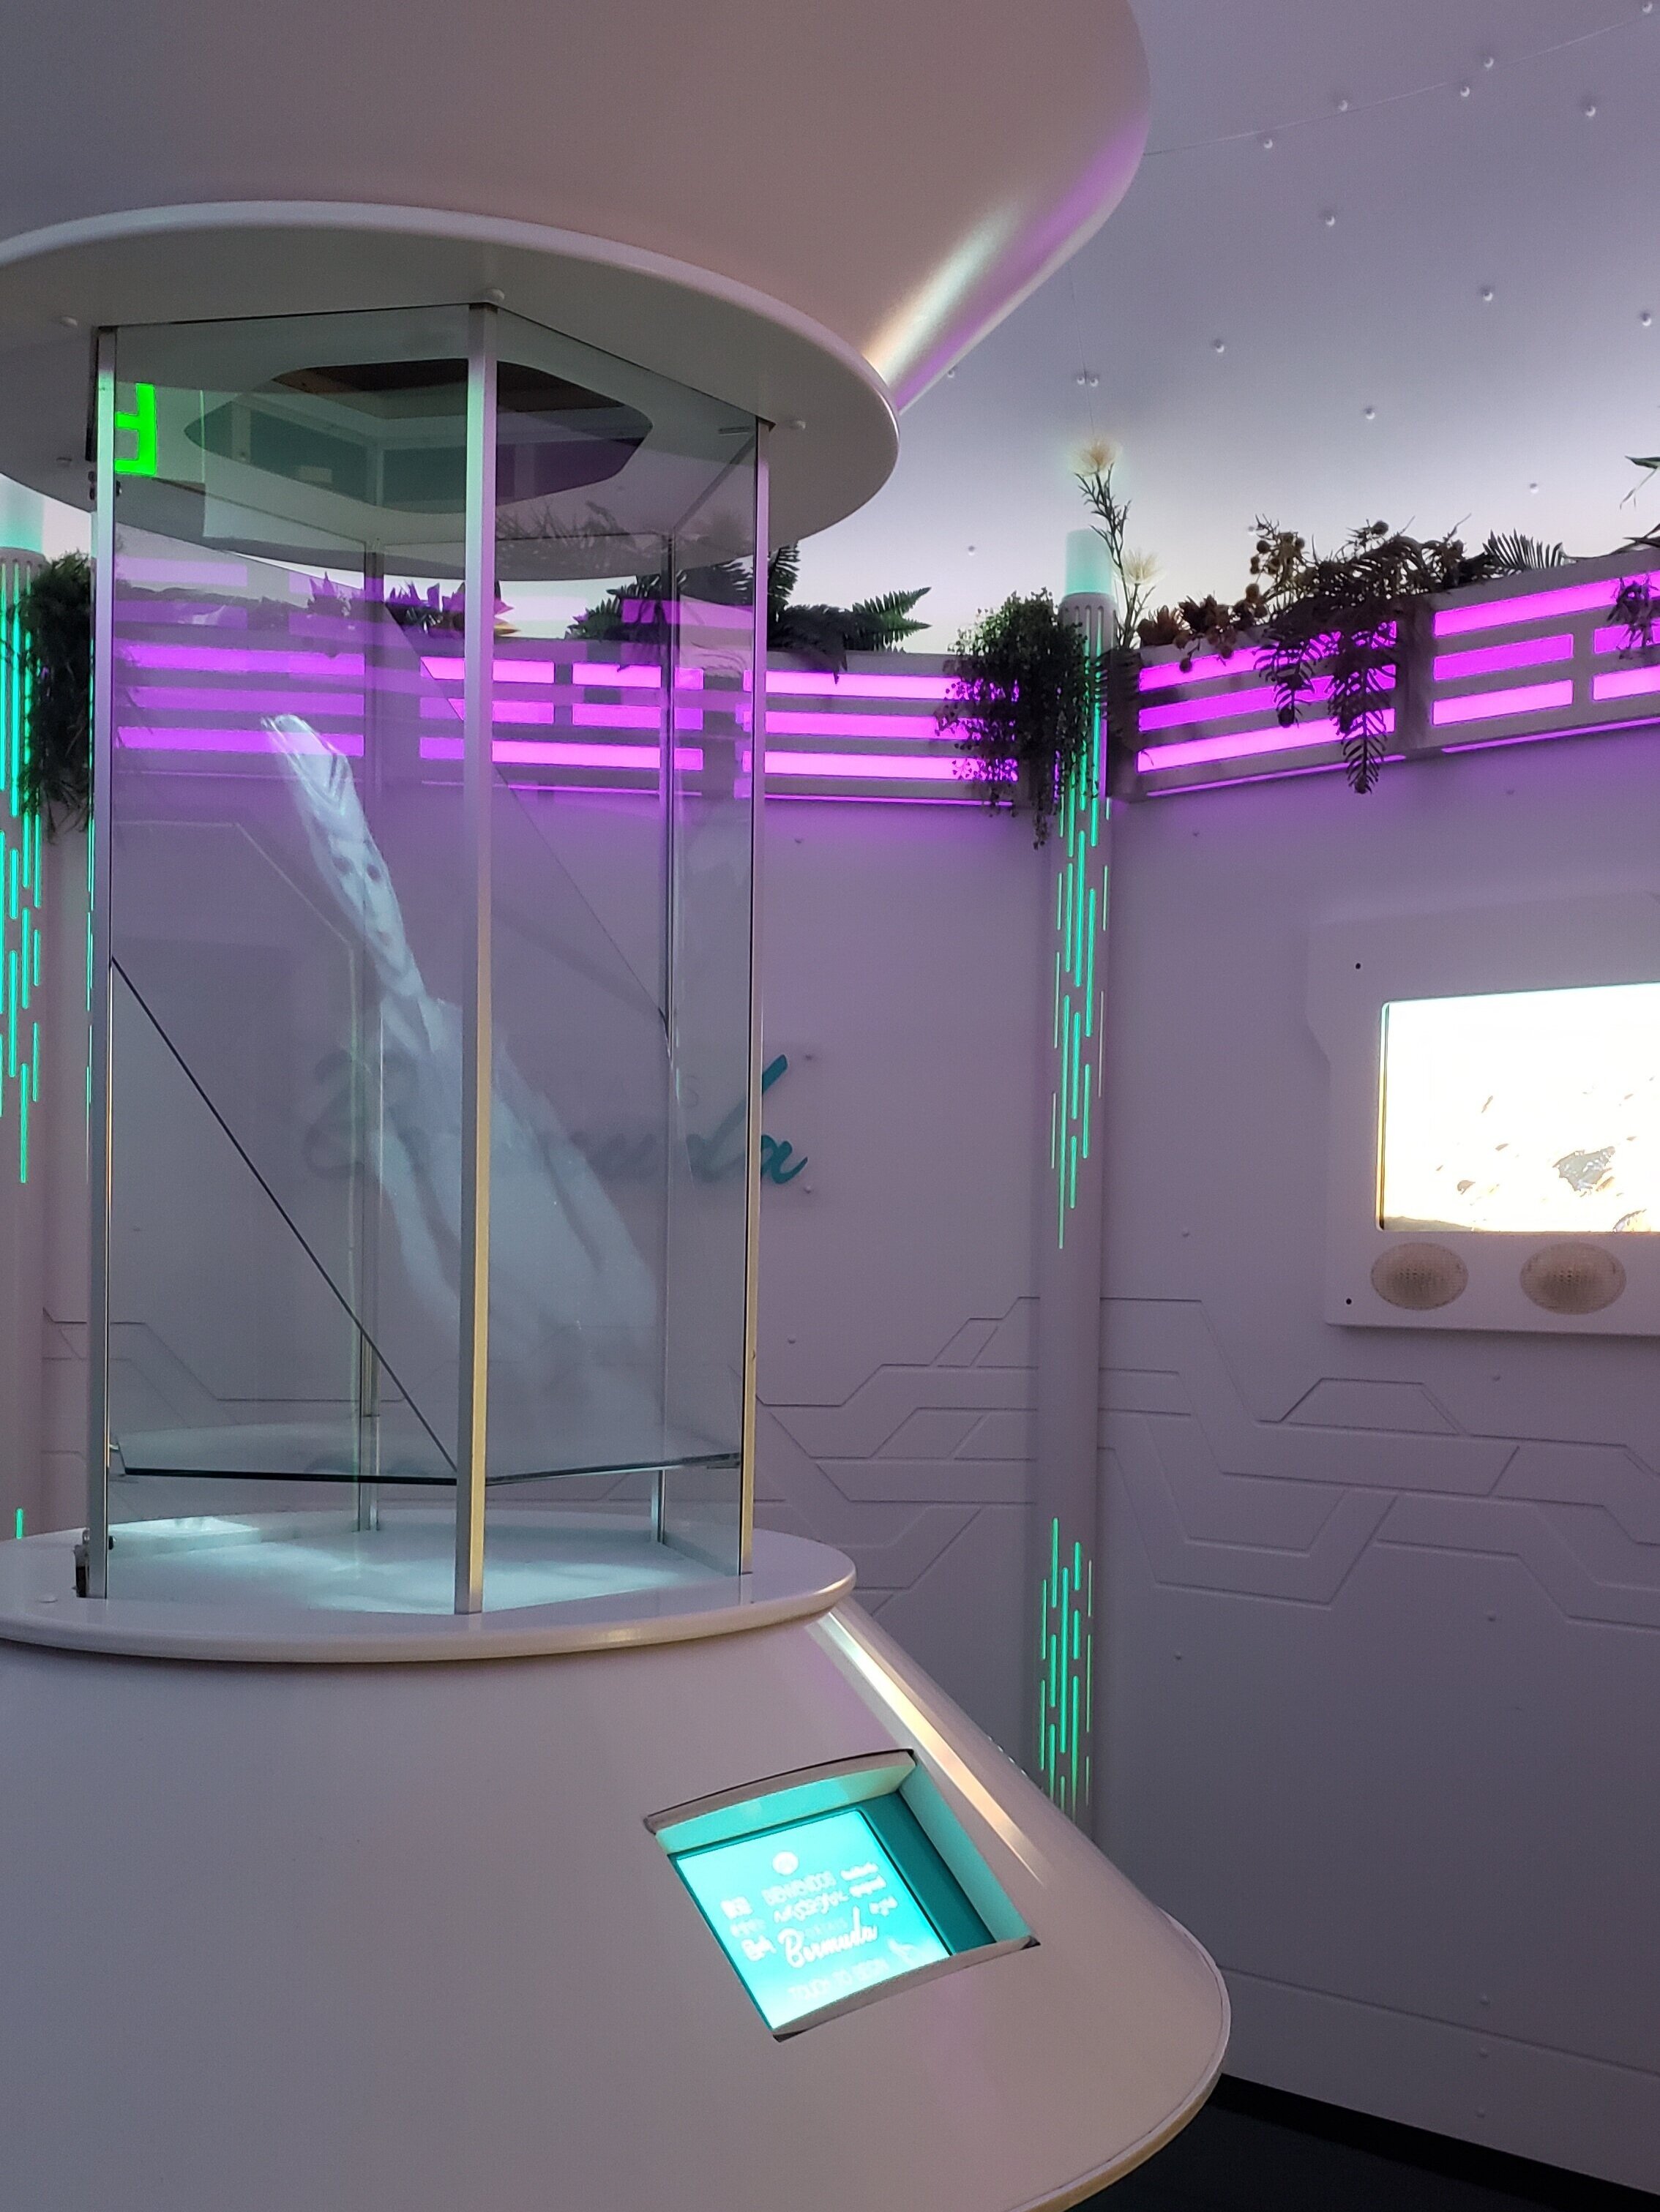 Futuristic spaceship display